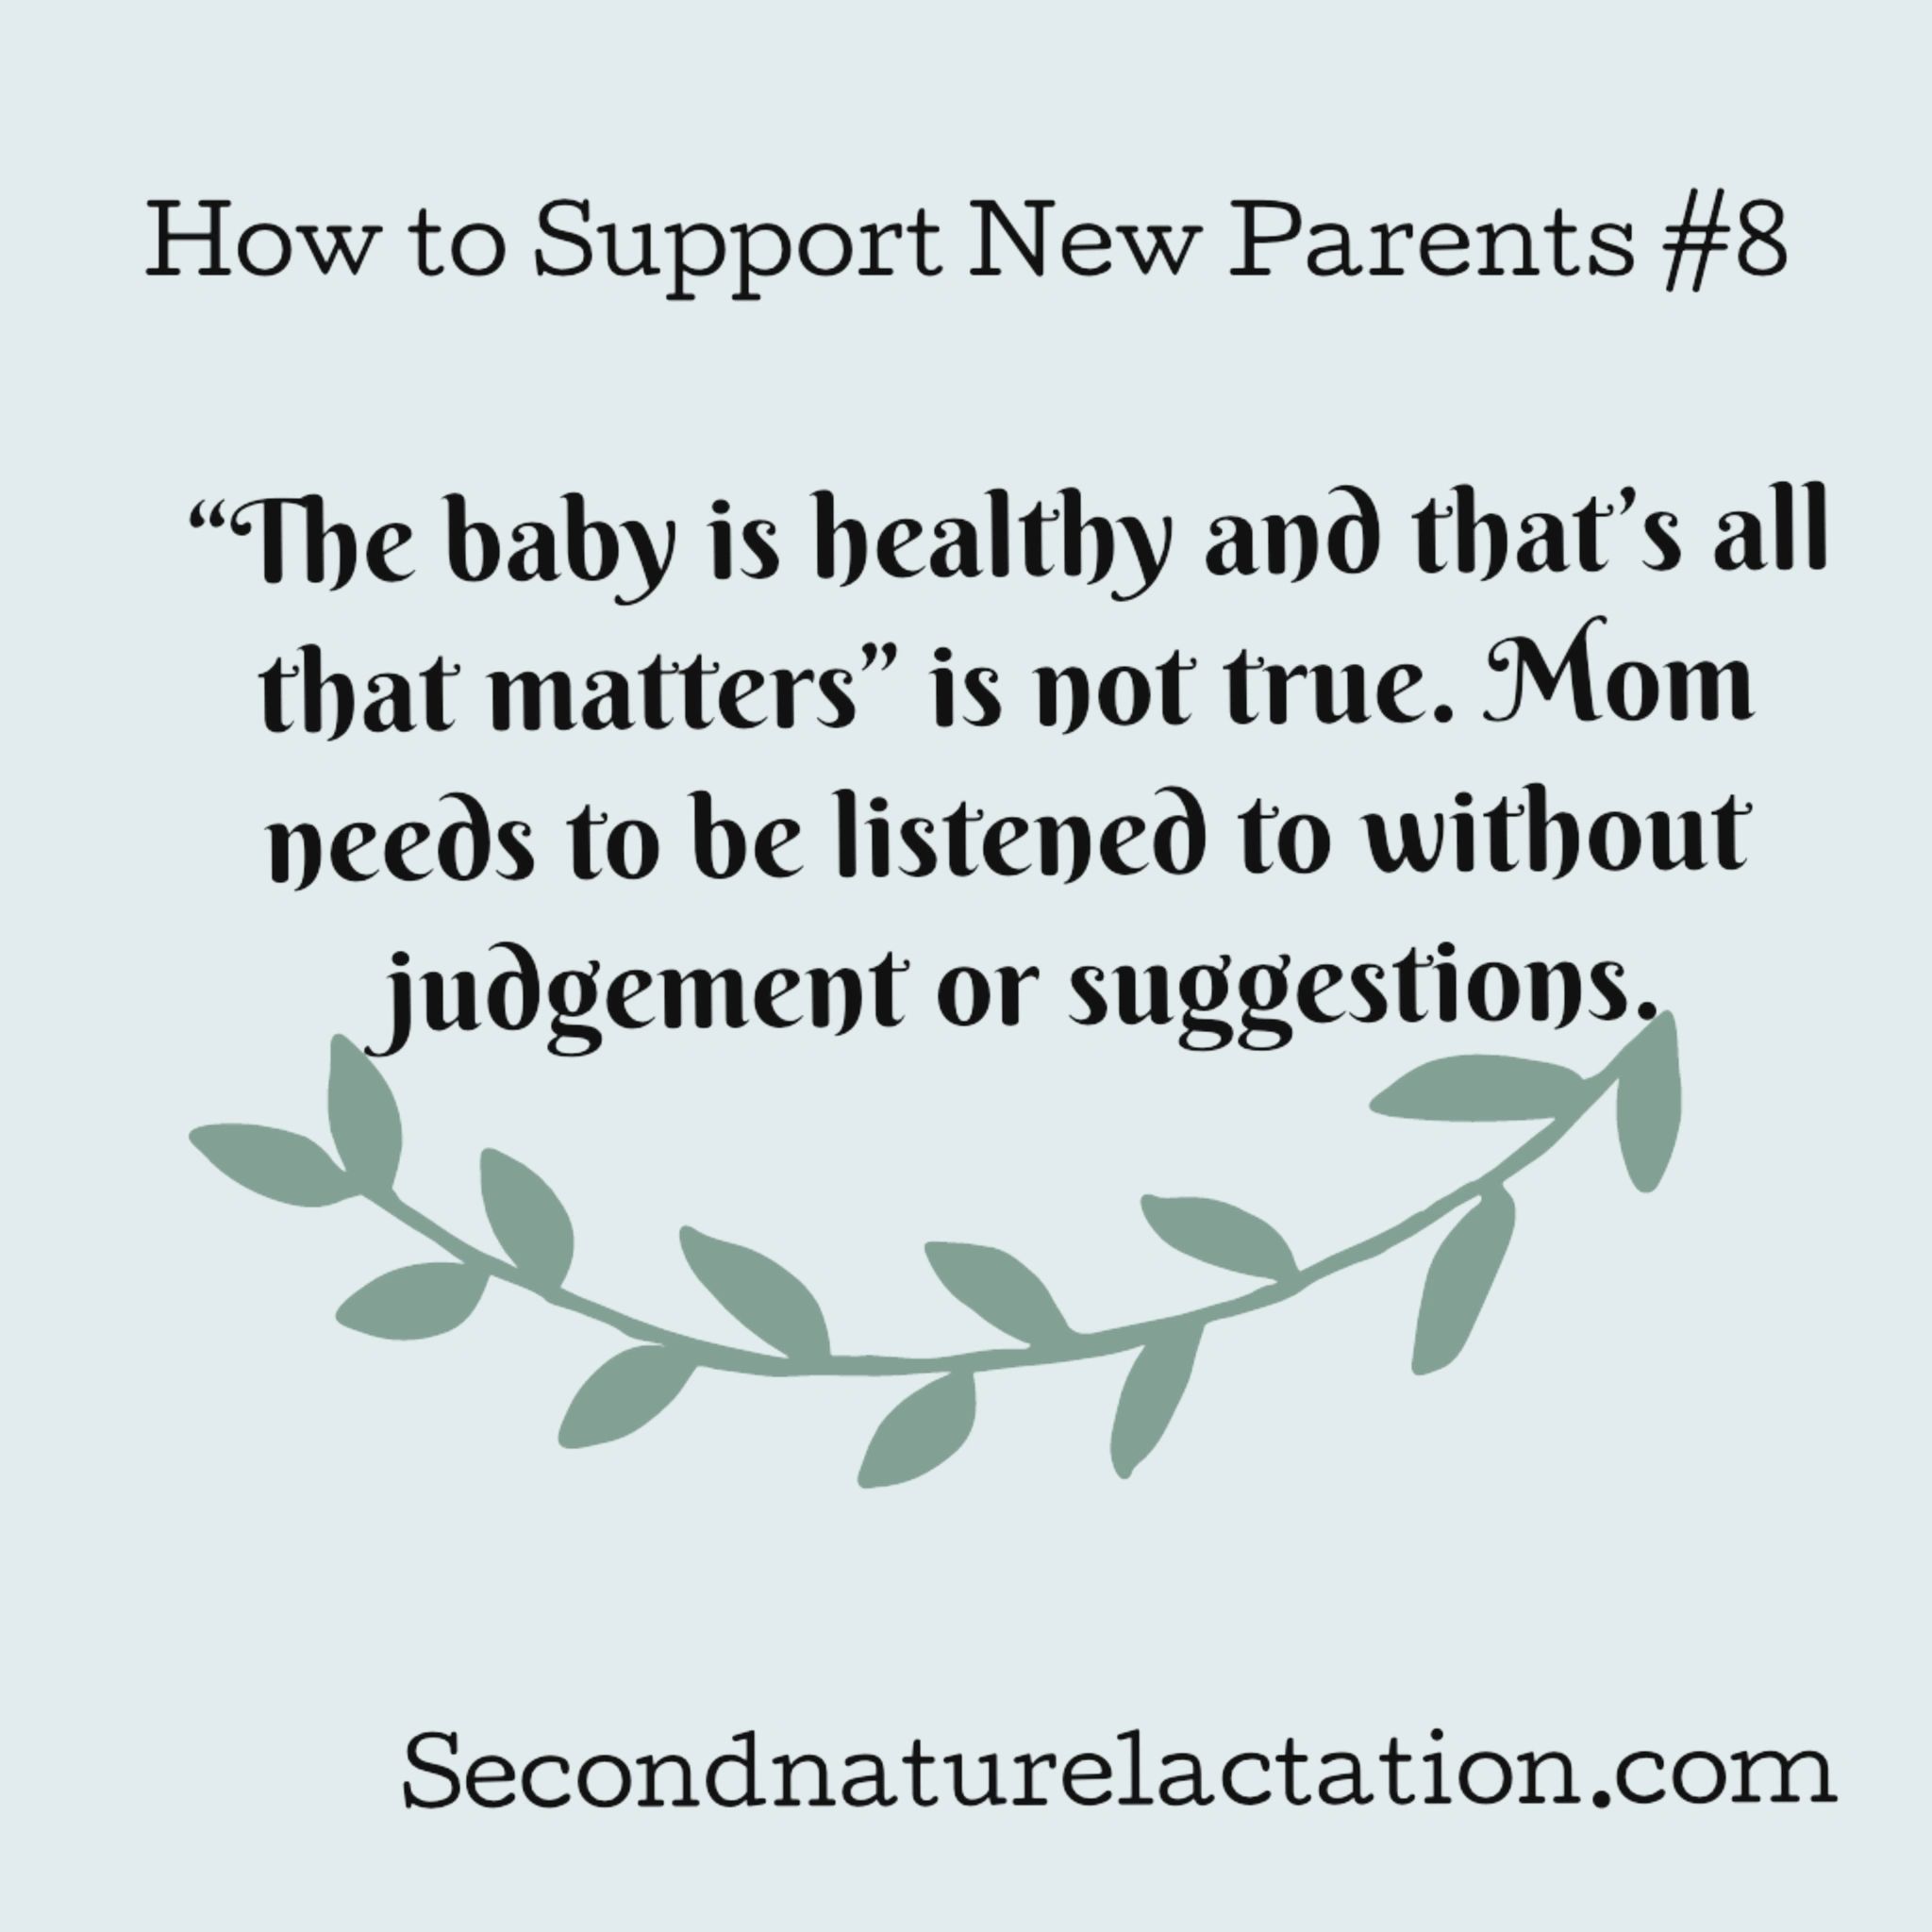 judgemental parents quotes